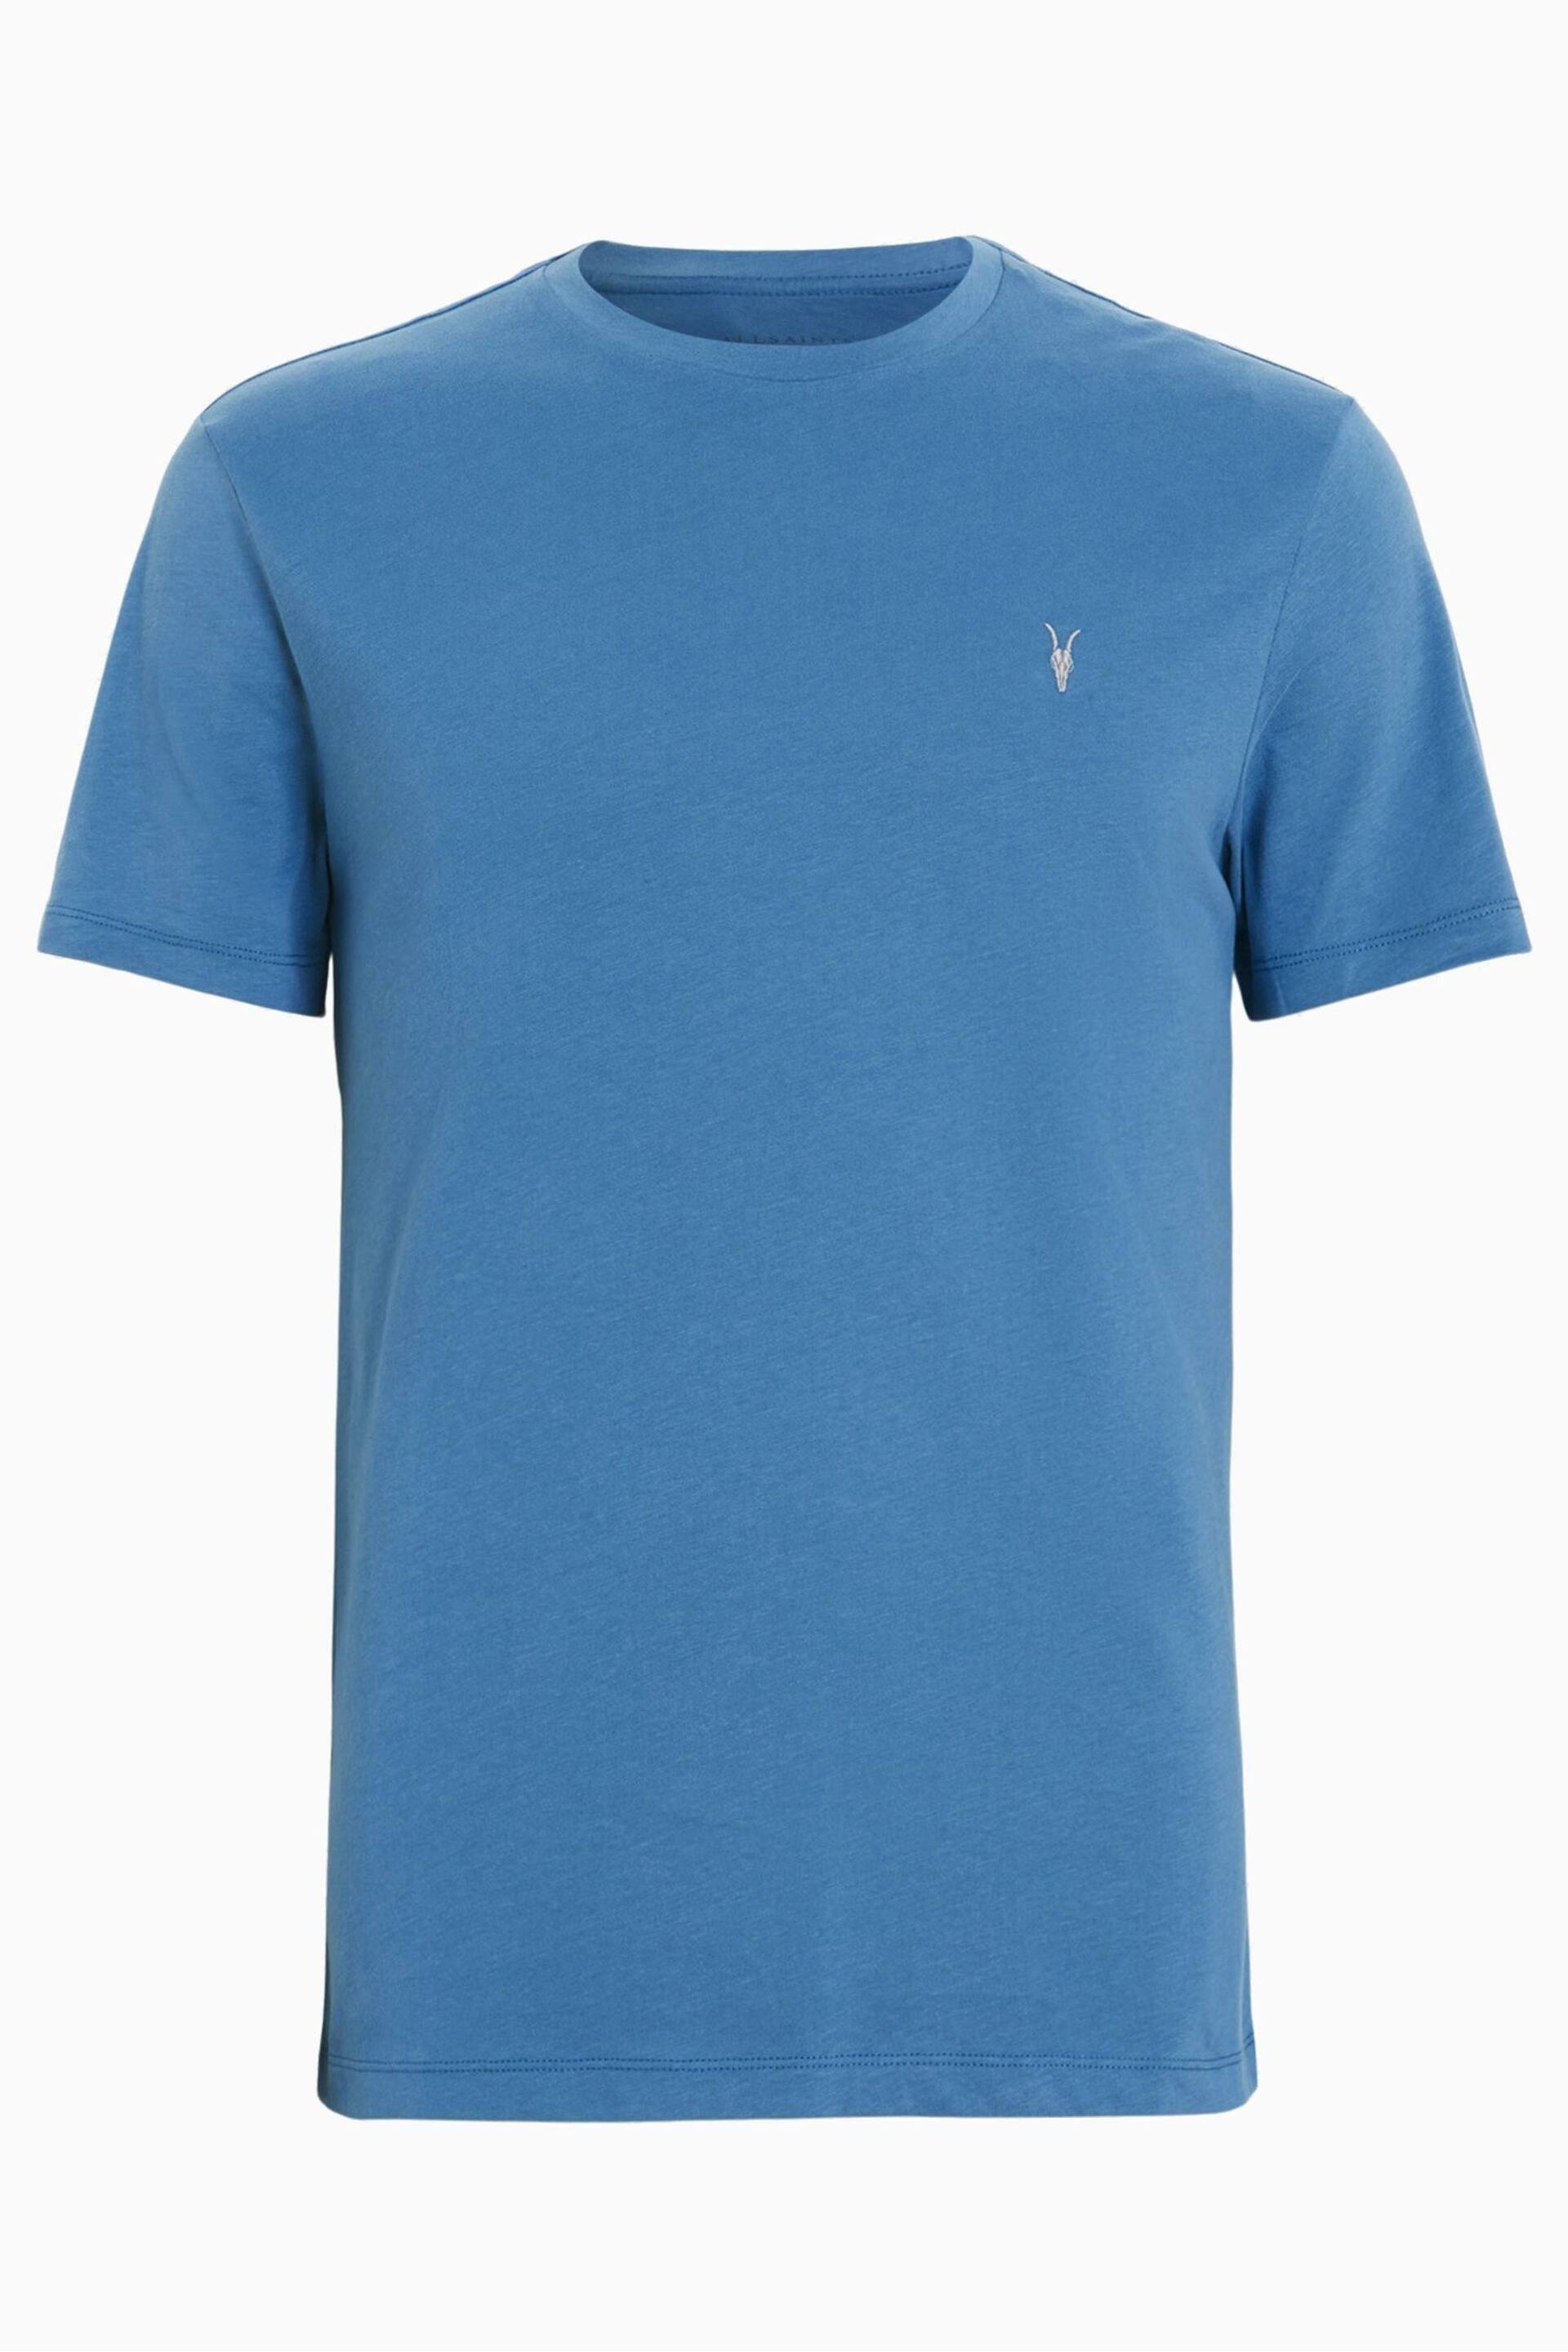 AllSaints Blue Brace Short Sleeve Crew Neck T-Shirt - Image 5 of 5